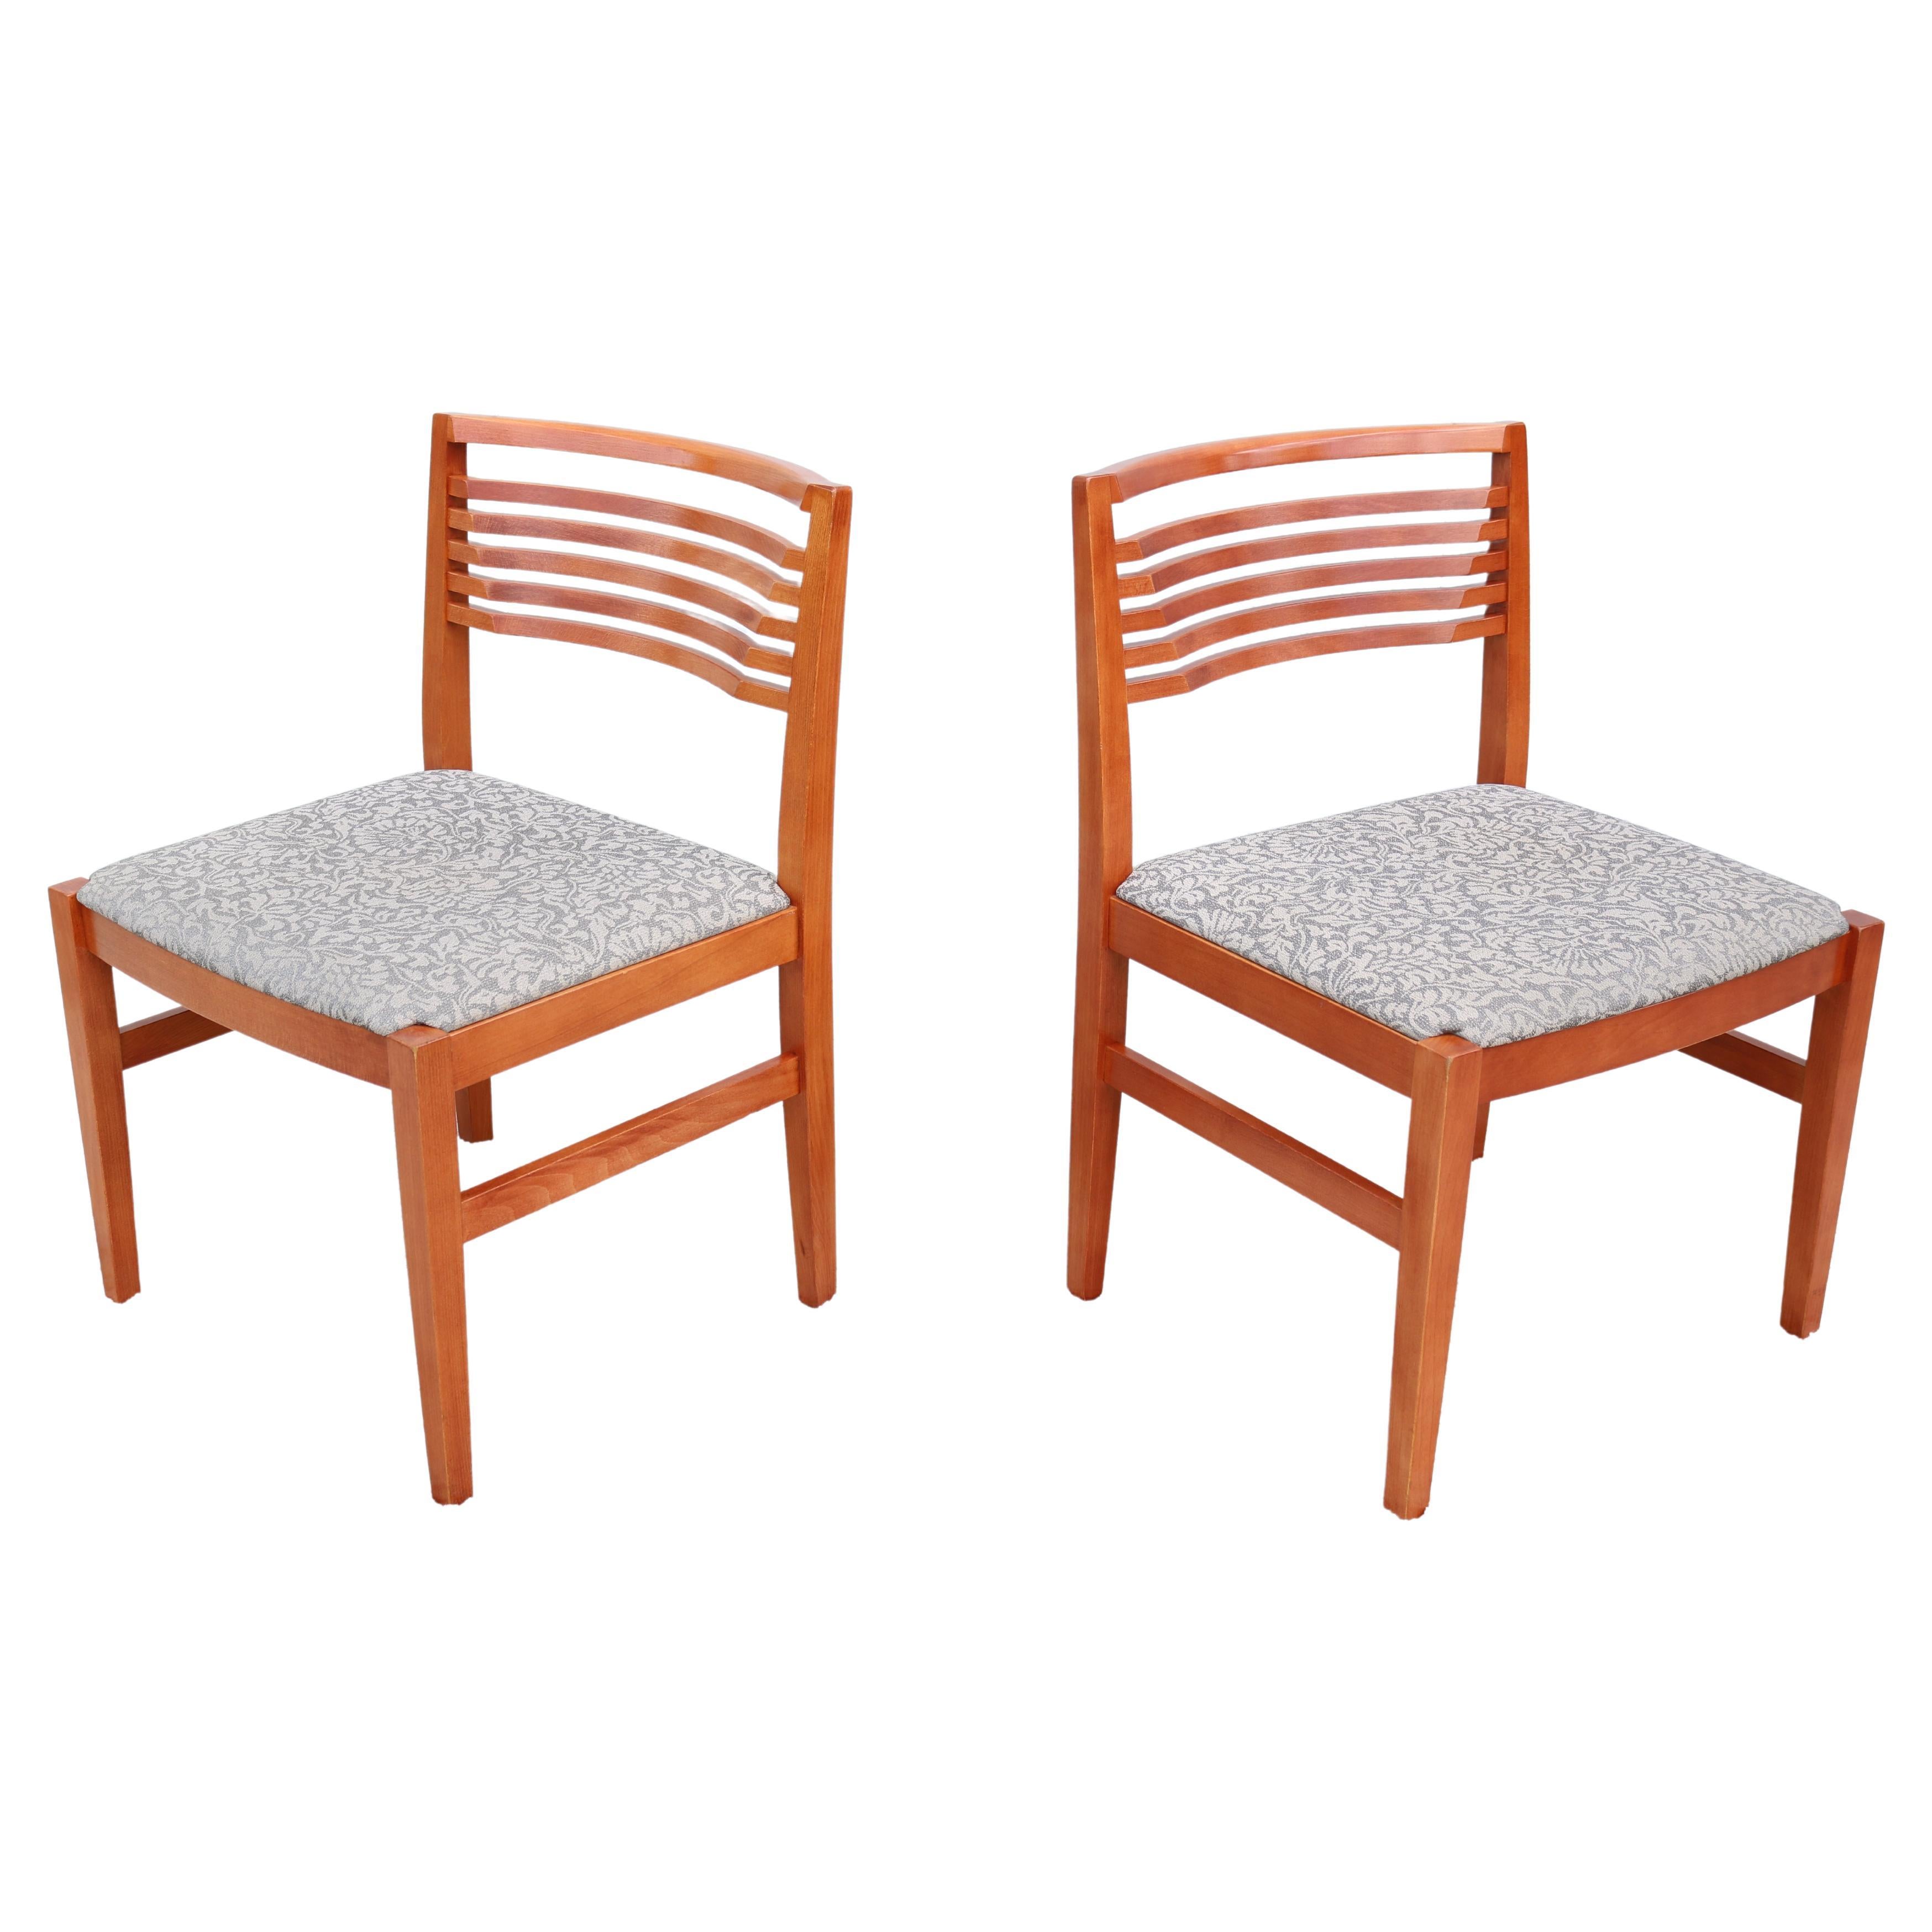 Modern Joseph and Linda Ricchio for Knoll Ricchio Armless Dining Chairs, a Pair For Sale